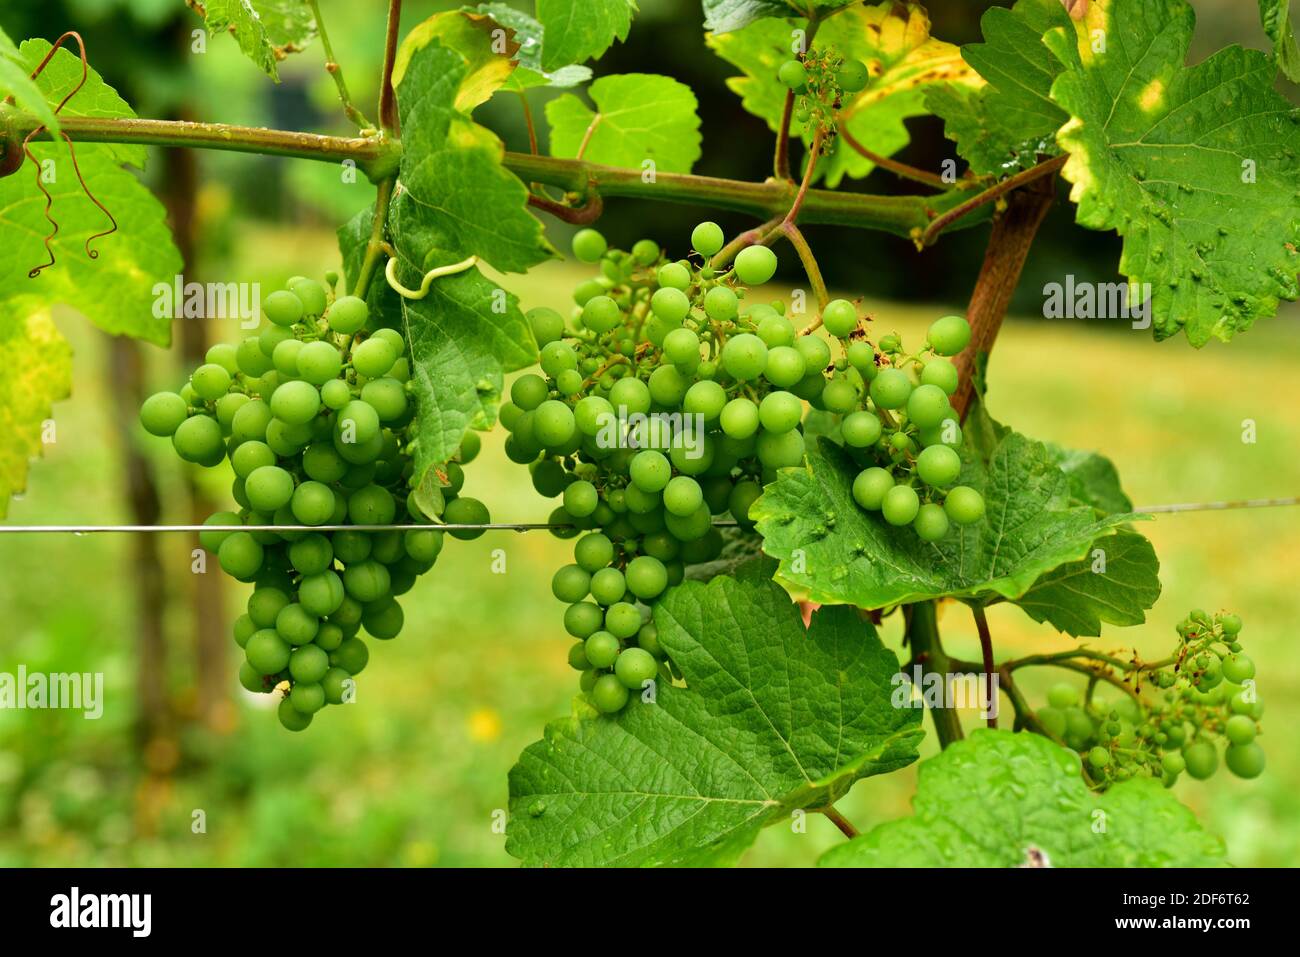 Common grape vine (Vitis vinifera) is a deciduous climber shrub native to Mediterranean Basin, central Europe and southwestern Asia. Grape Stock Photo